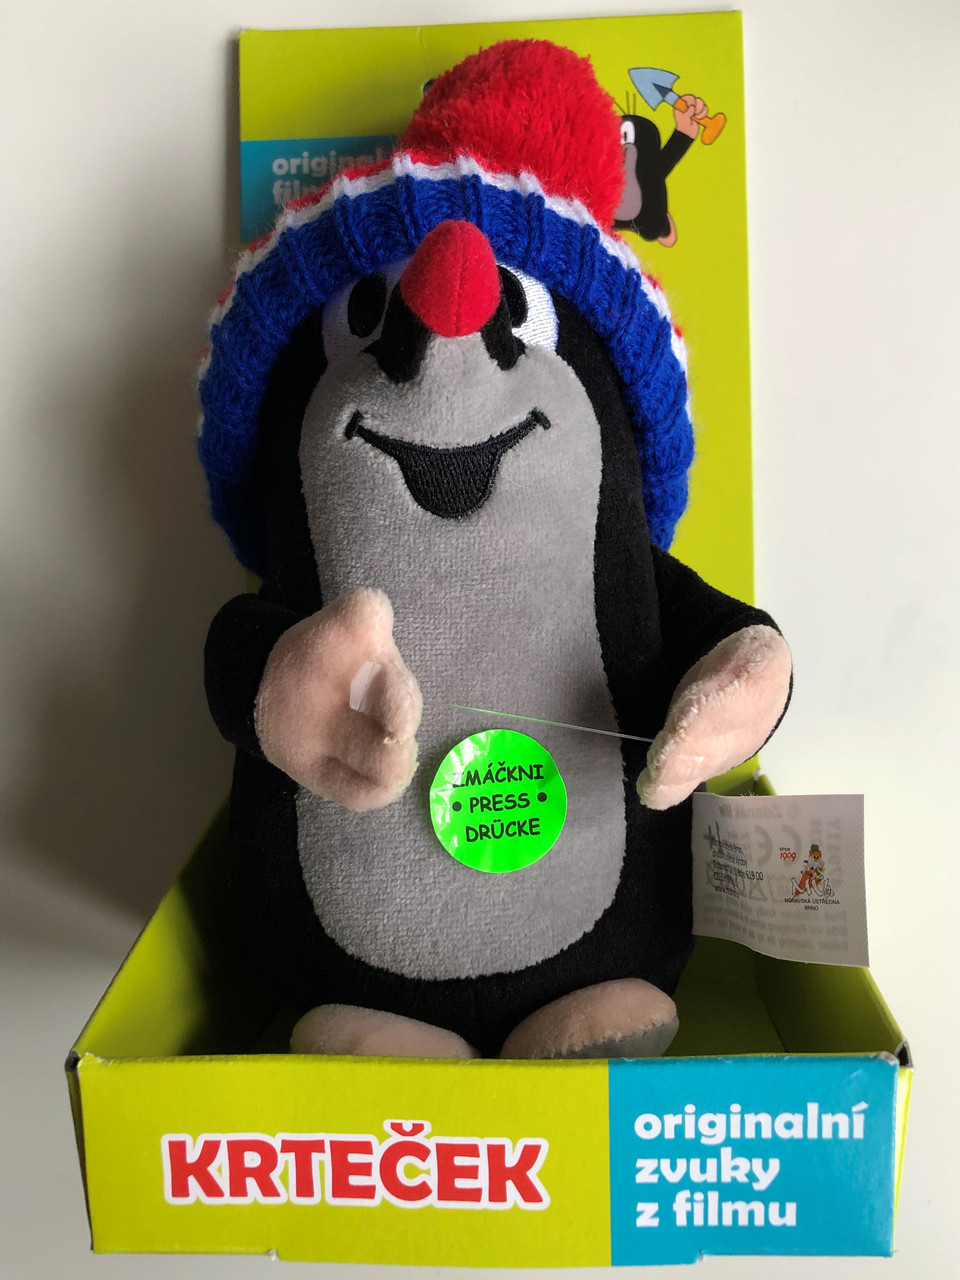 Krtek - Talking Little mole with Tricolor Cap - plush toy with original  film sounds / Krteček - Originální filmové